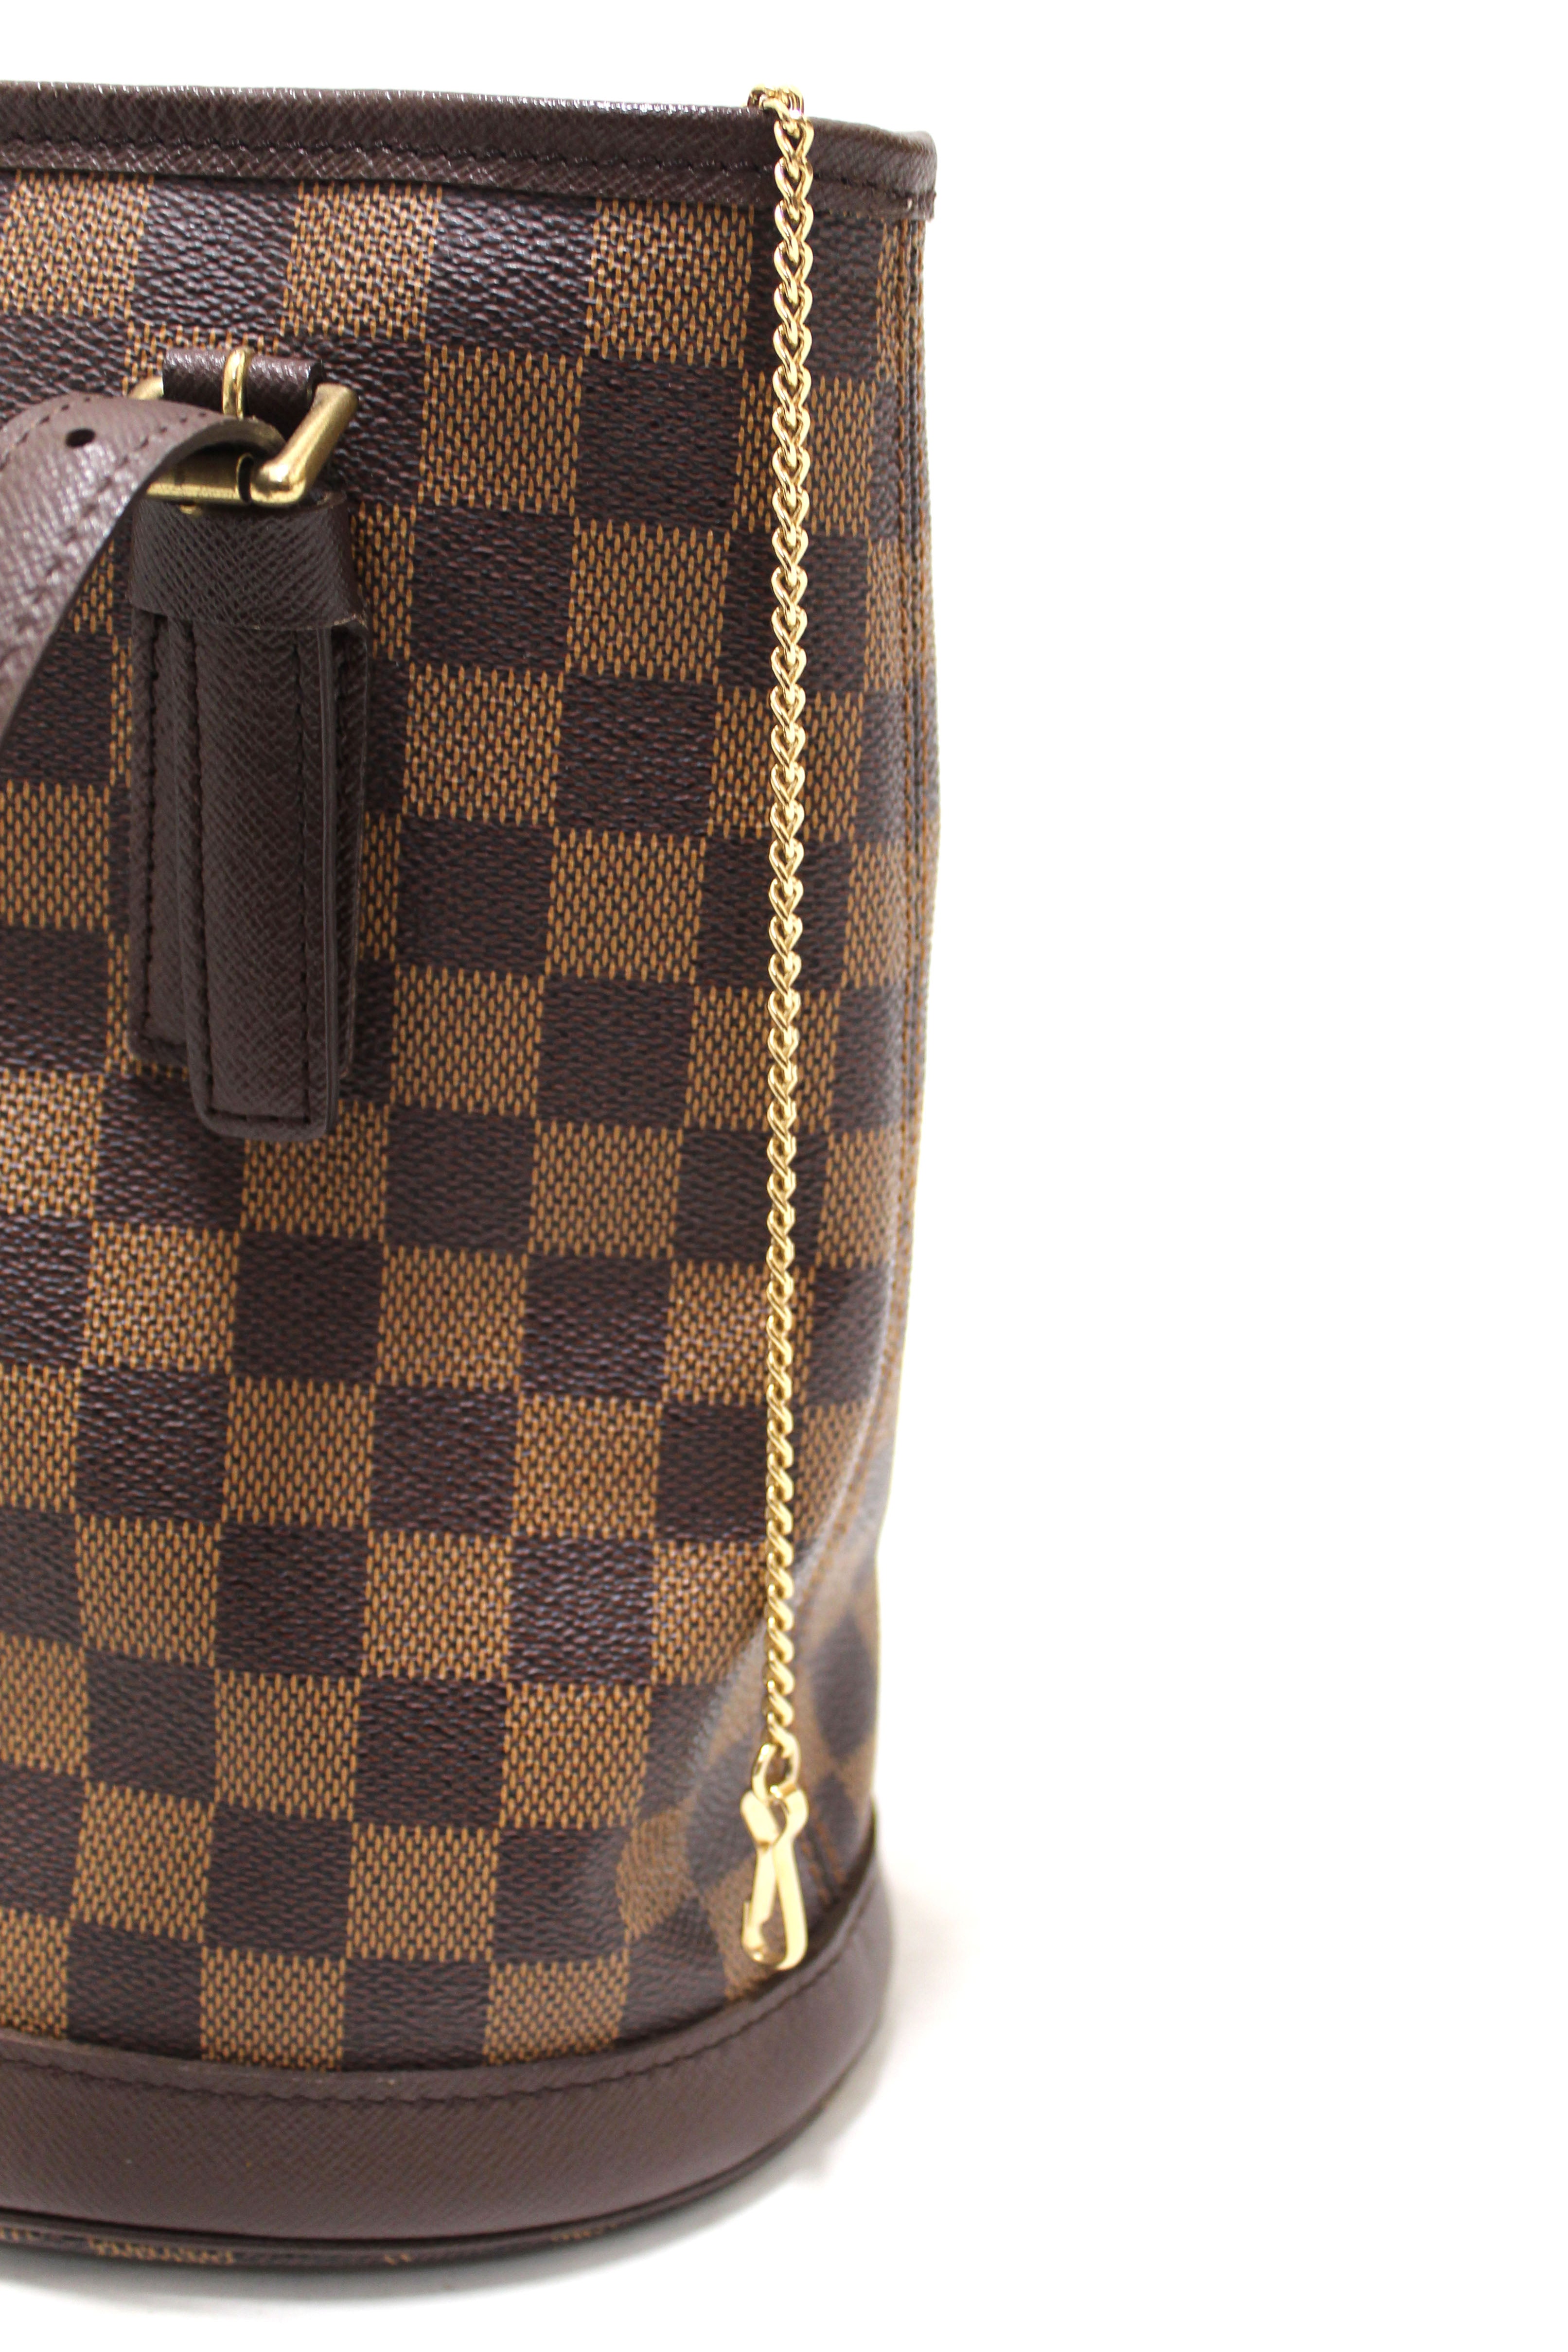 Louis Vuitton, Bags, Authentic Louis Vuitton Bucket Pm And Pouch